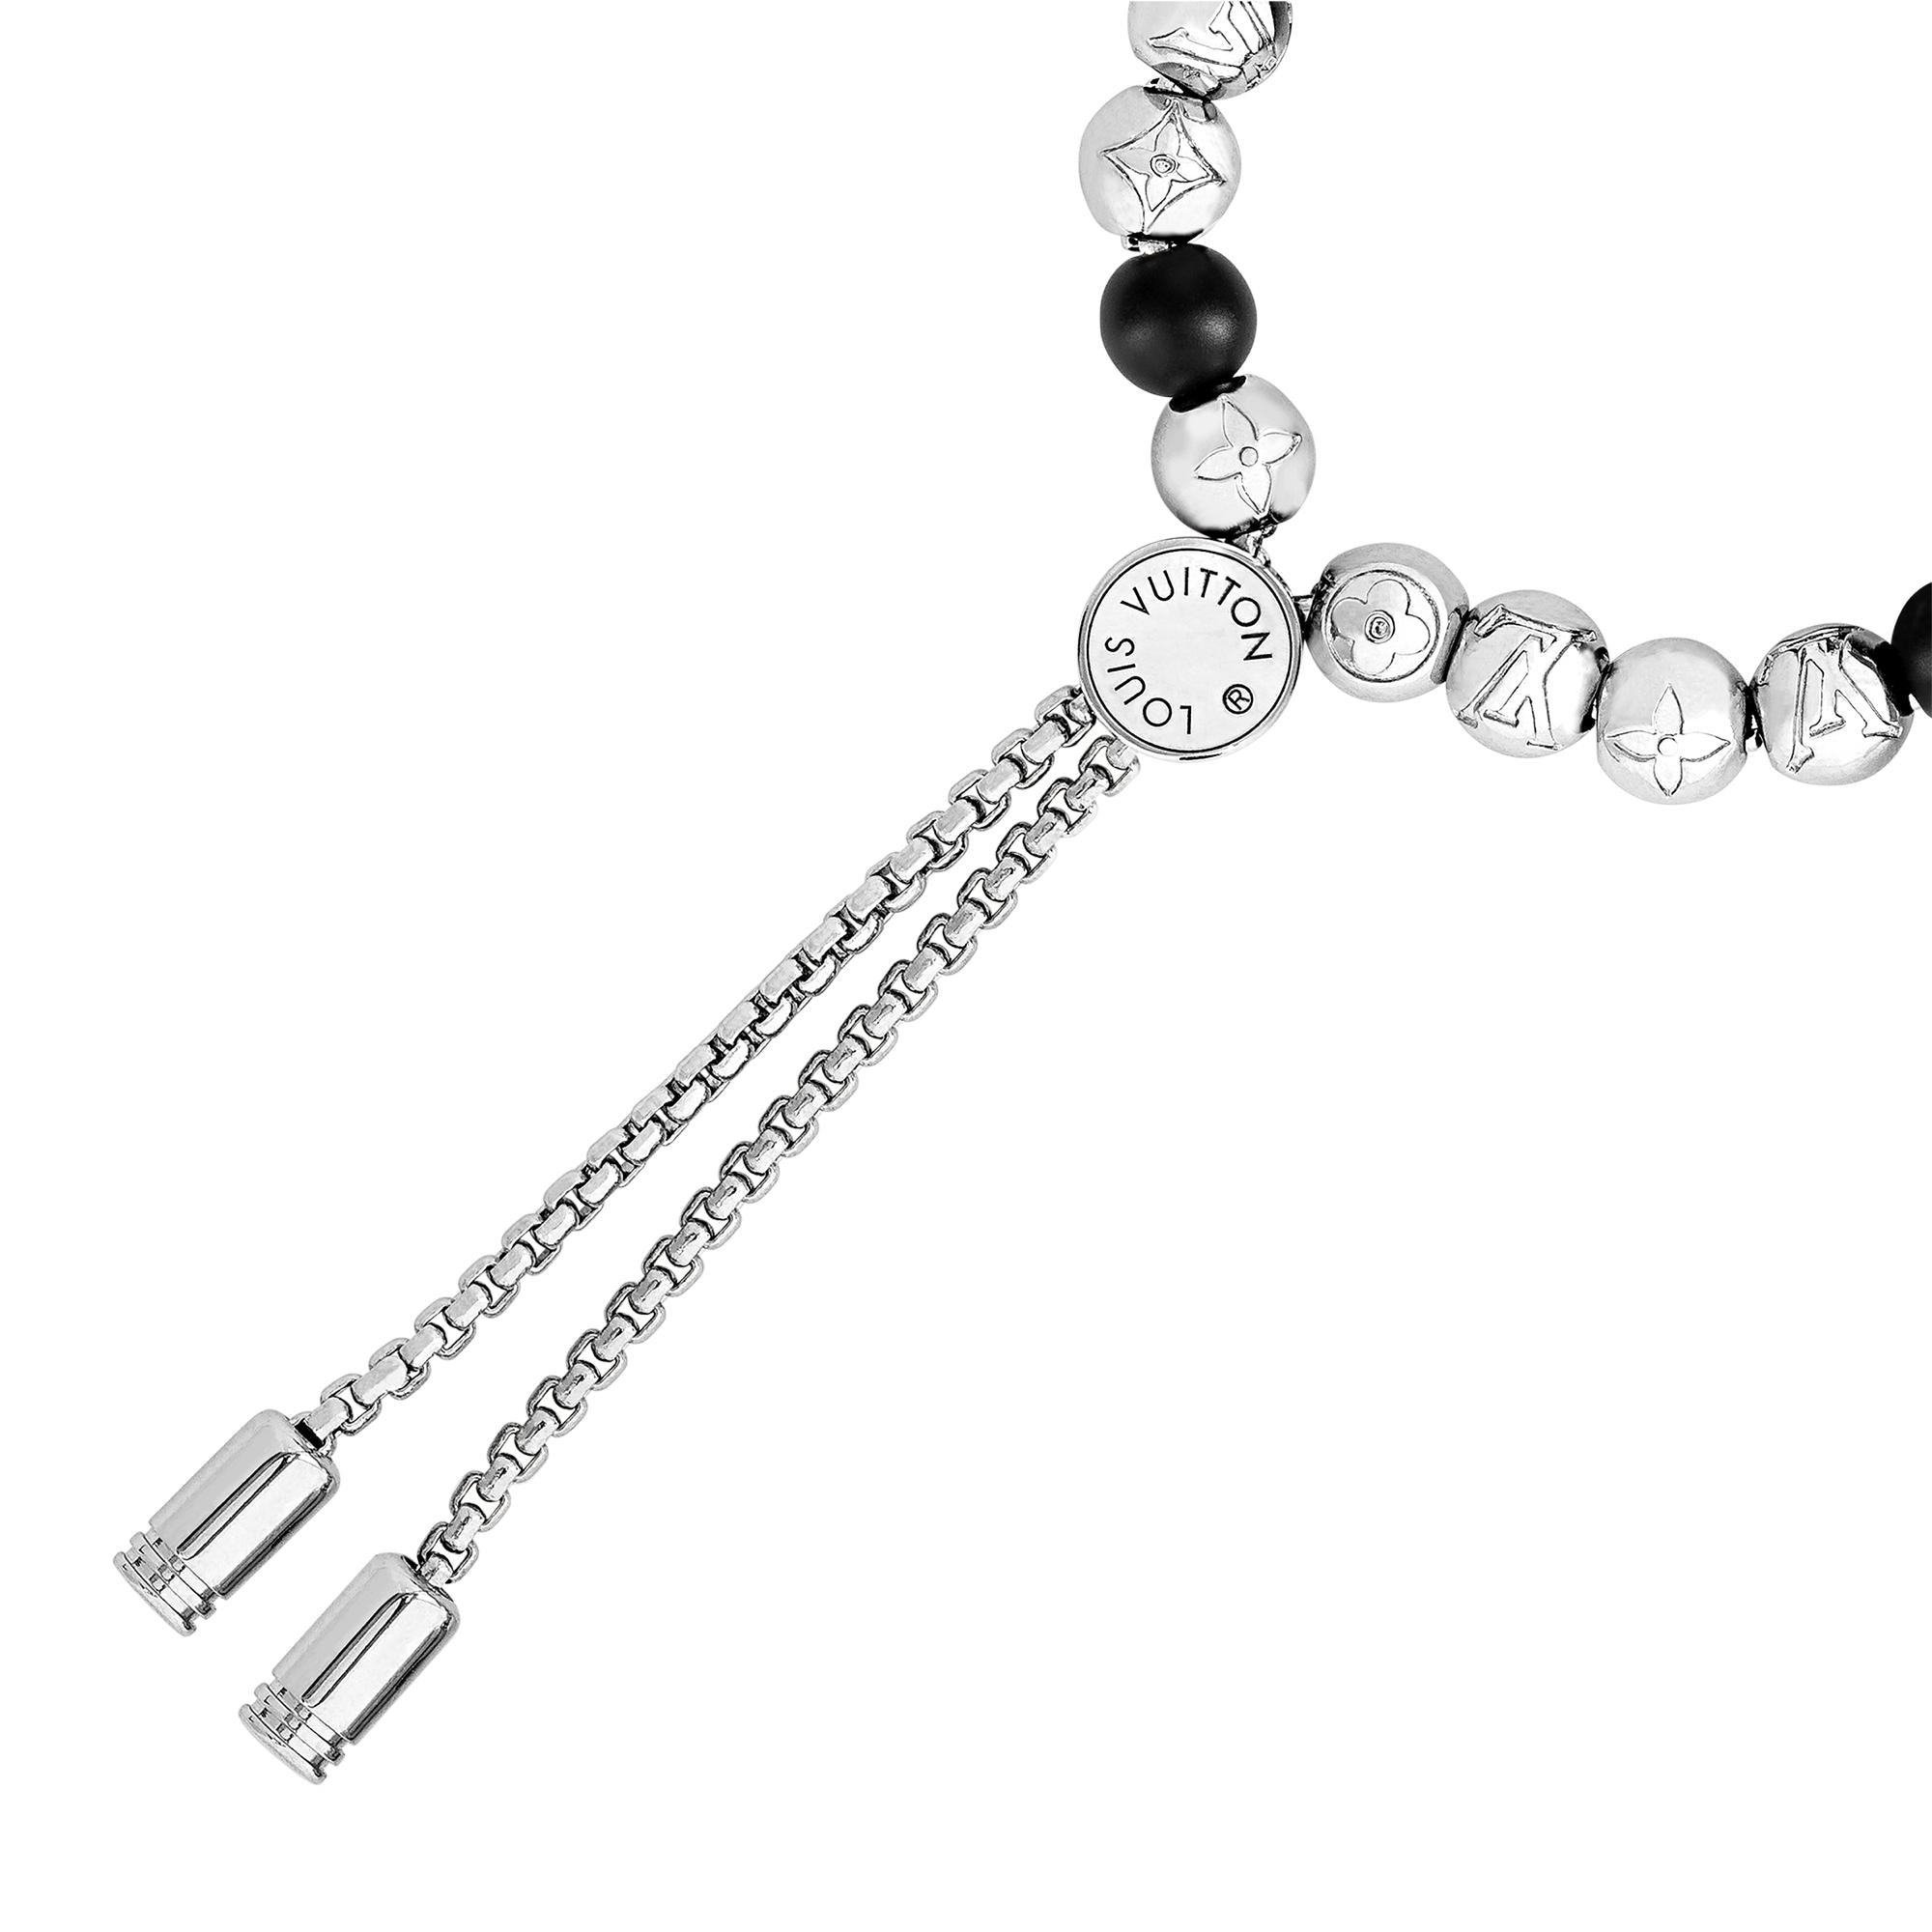 Monogram Beads Bracelet - 3